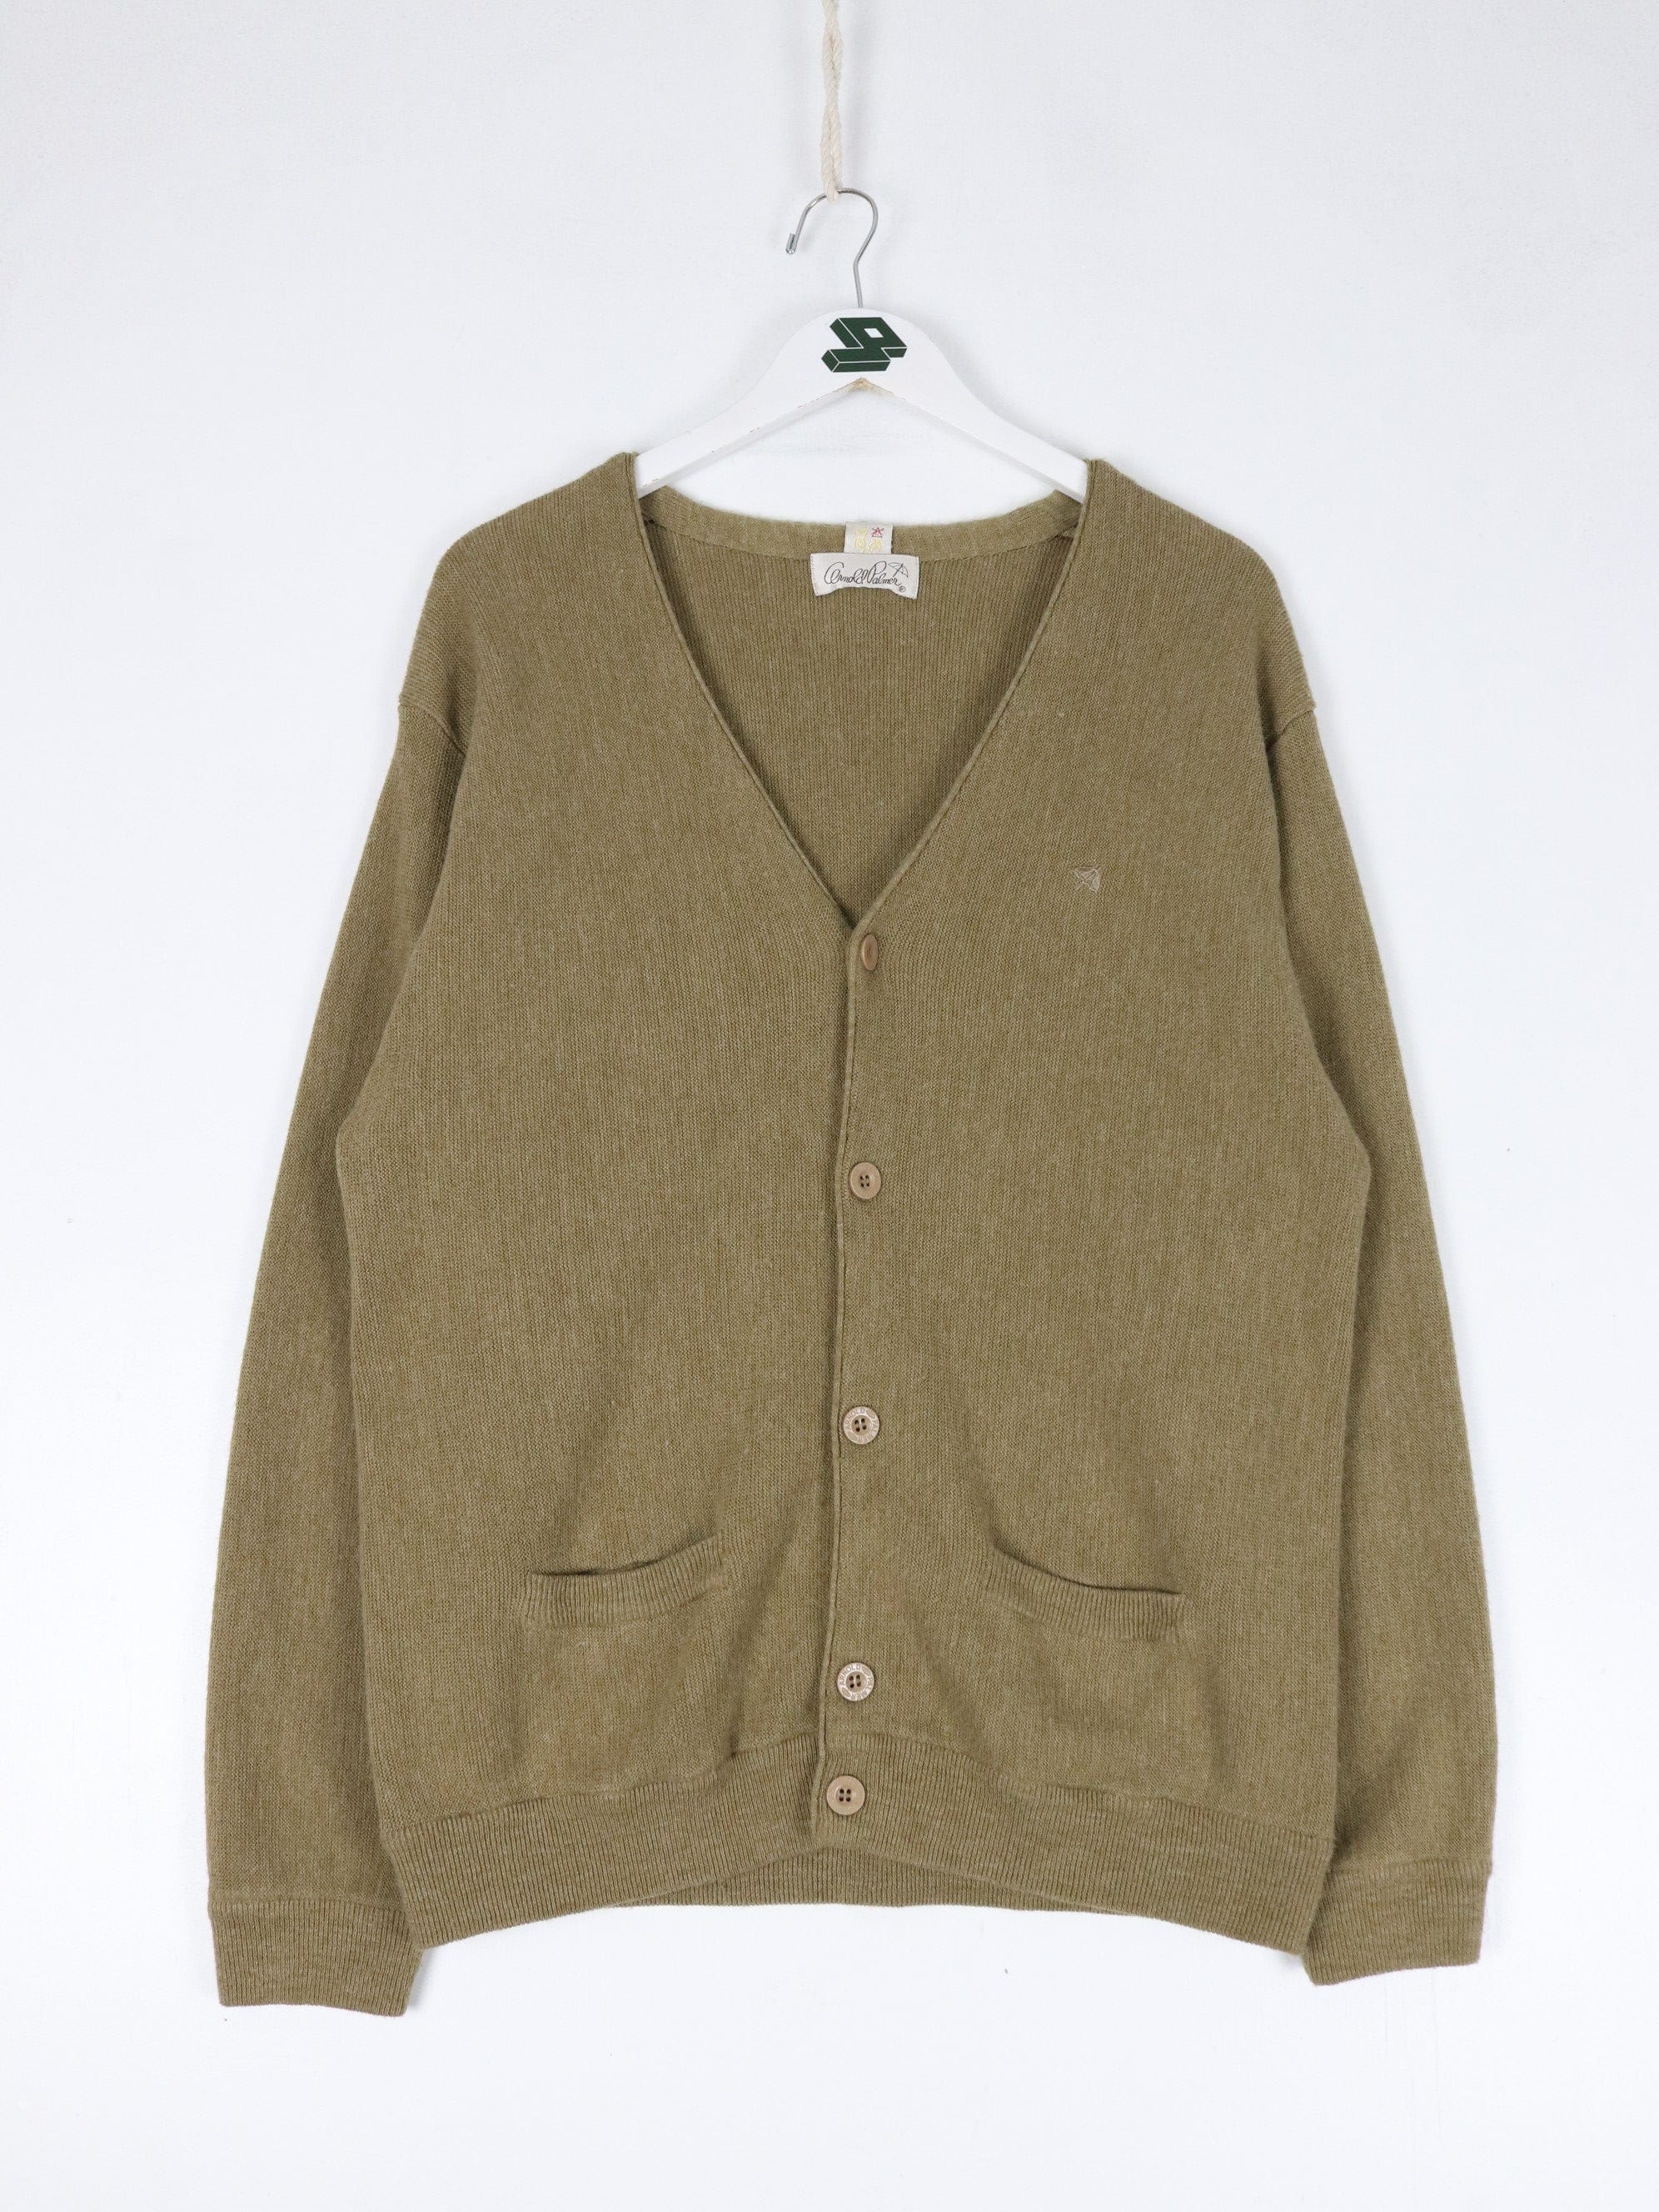 Vintage Arnold Palmer Sweater Mens XL Beige Knit Cardigan